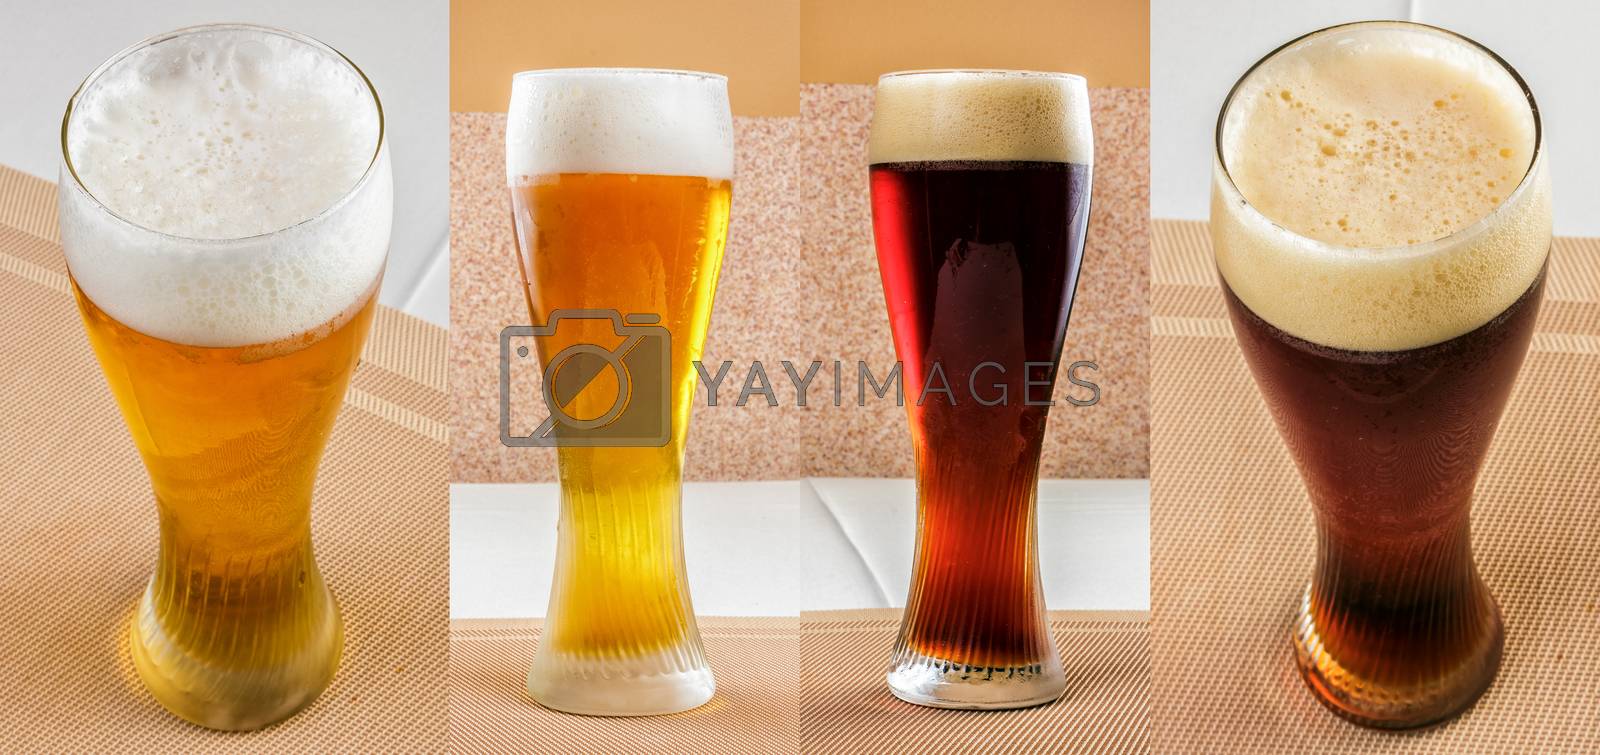 Royalty free image of lager beer and dark beer set by Pellinni